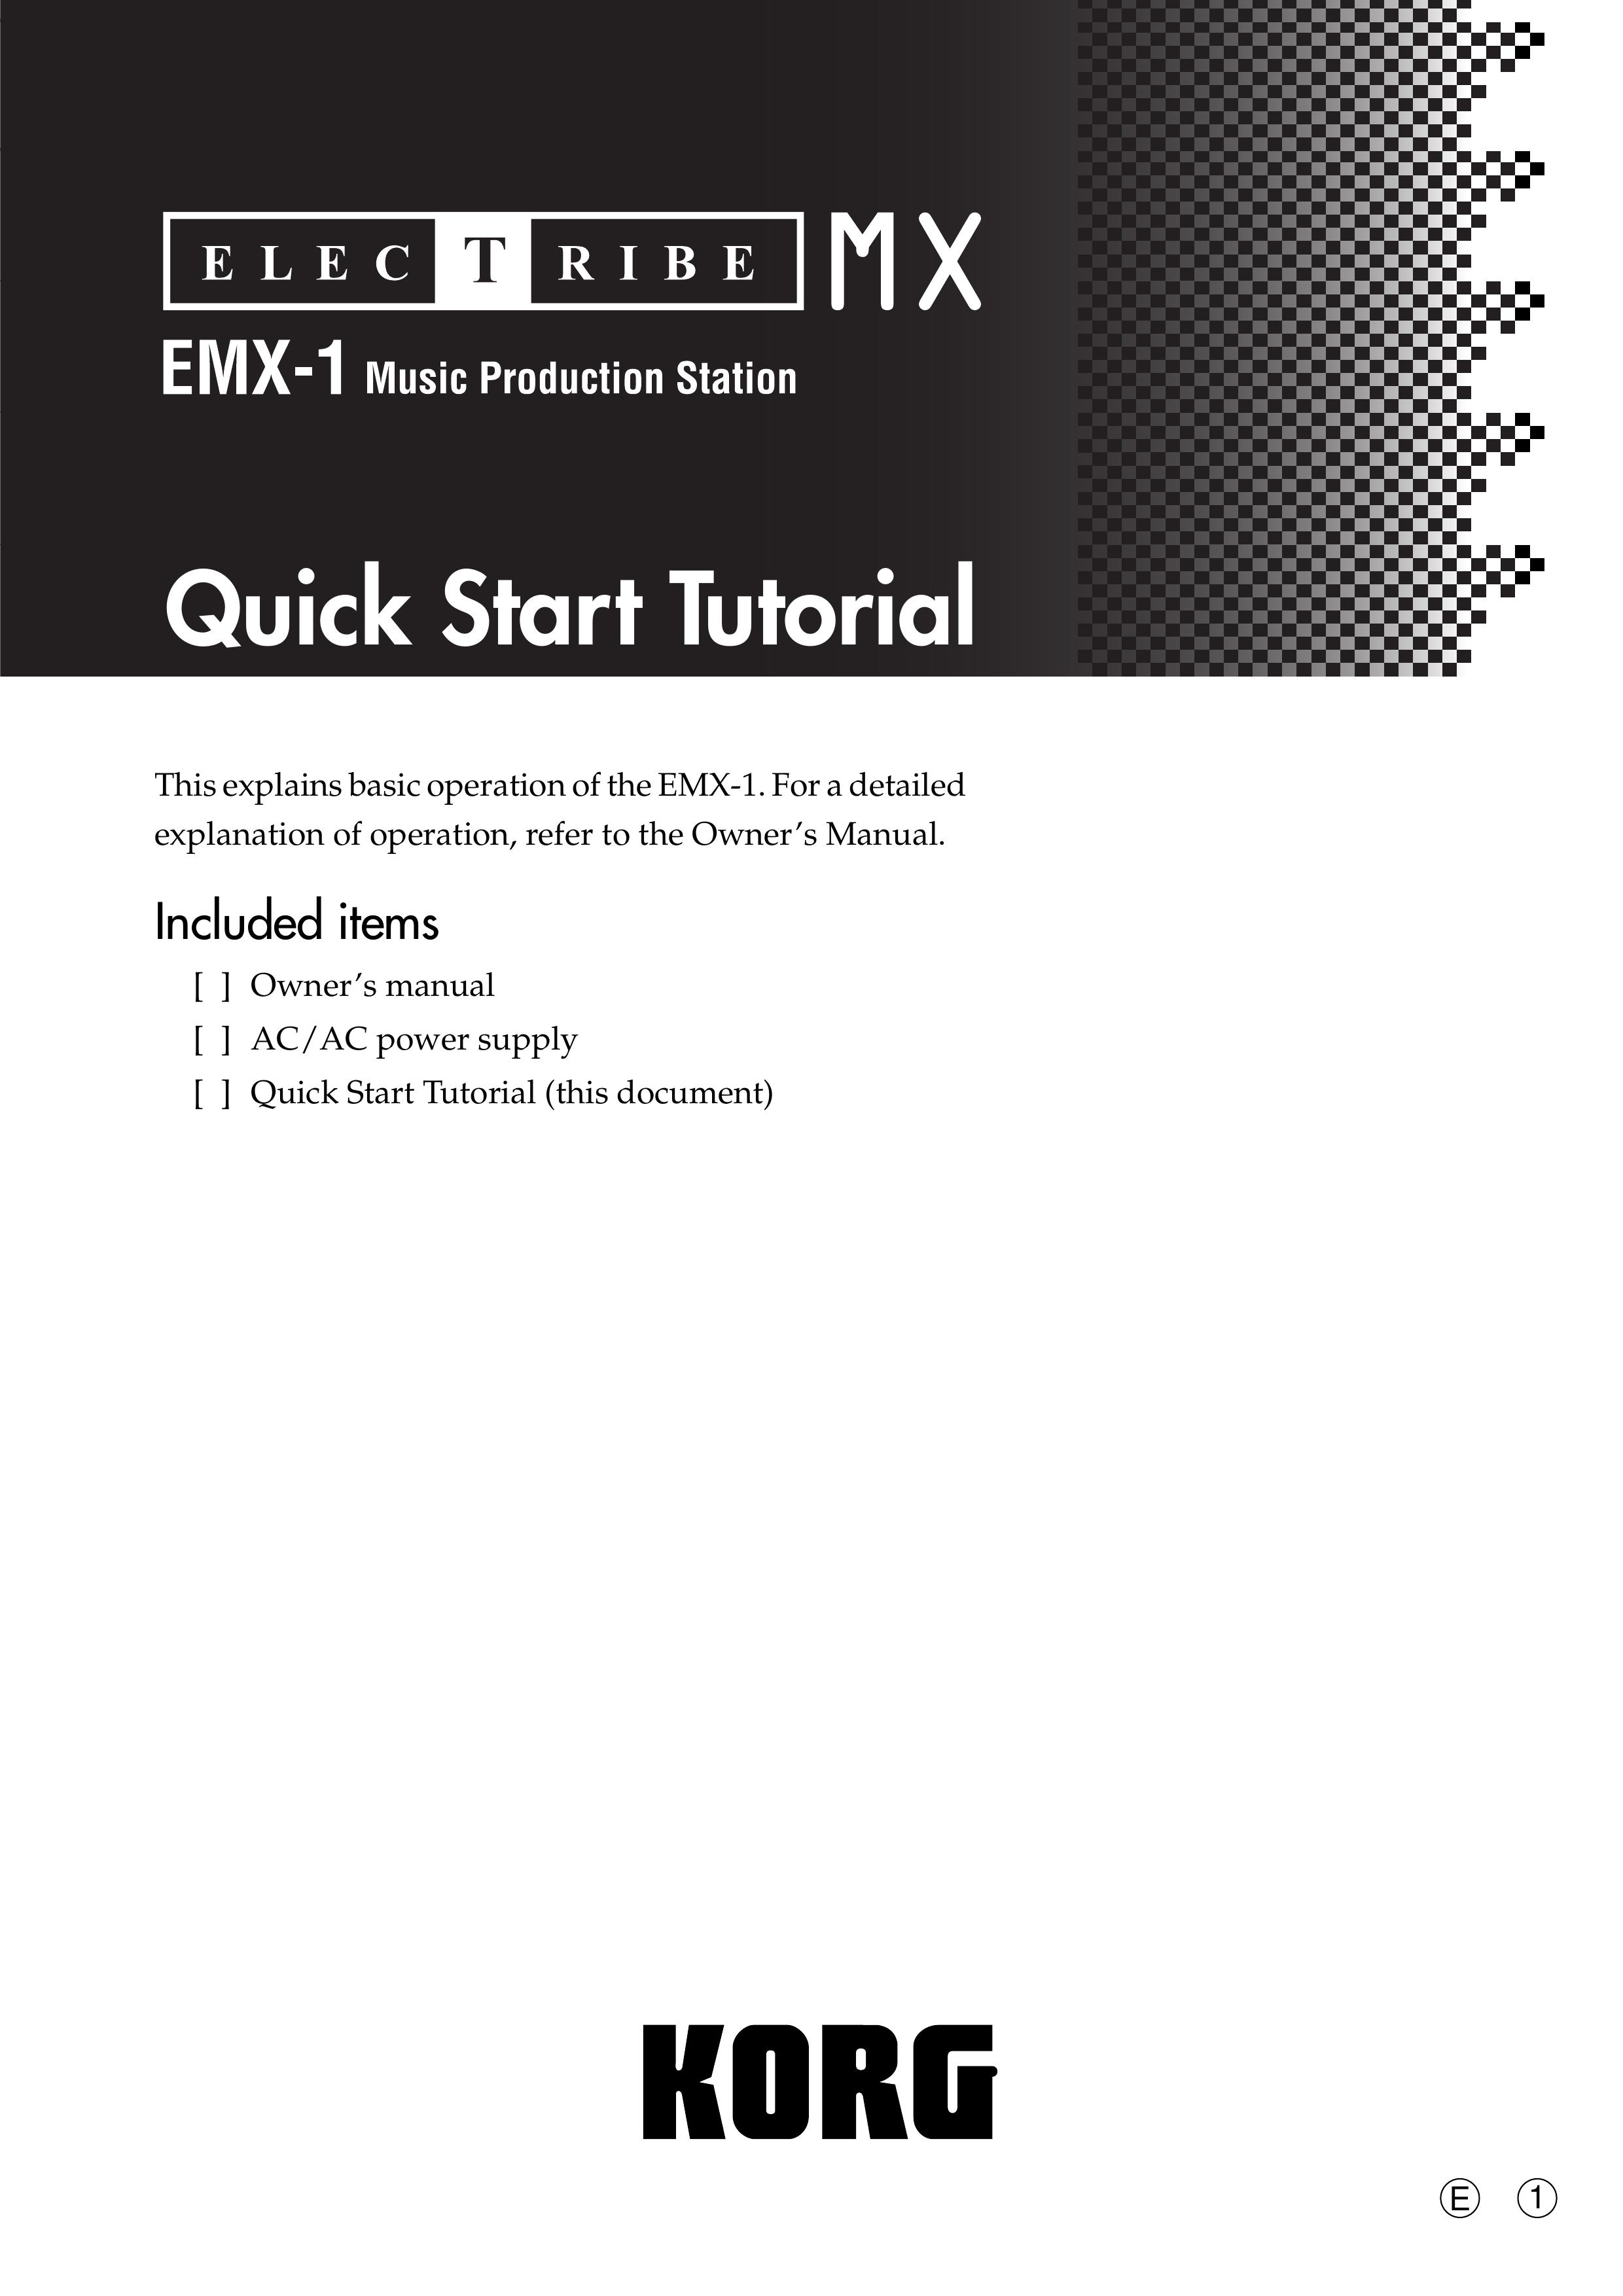 Korg EMX-1 DJ Equipment User Manual